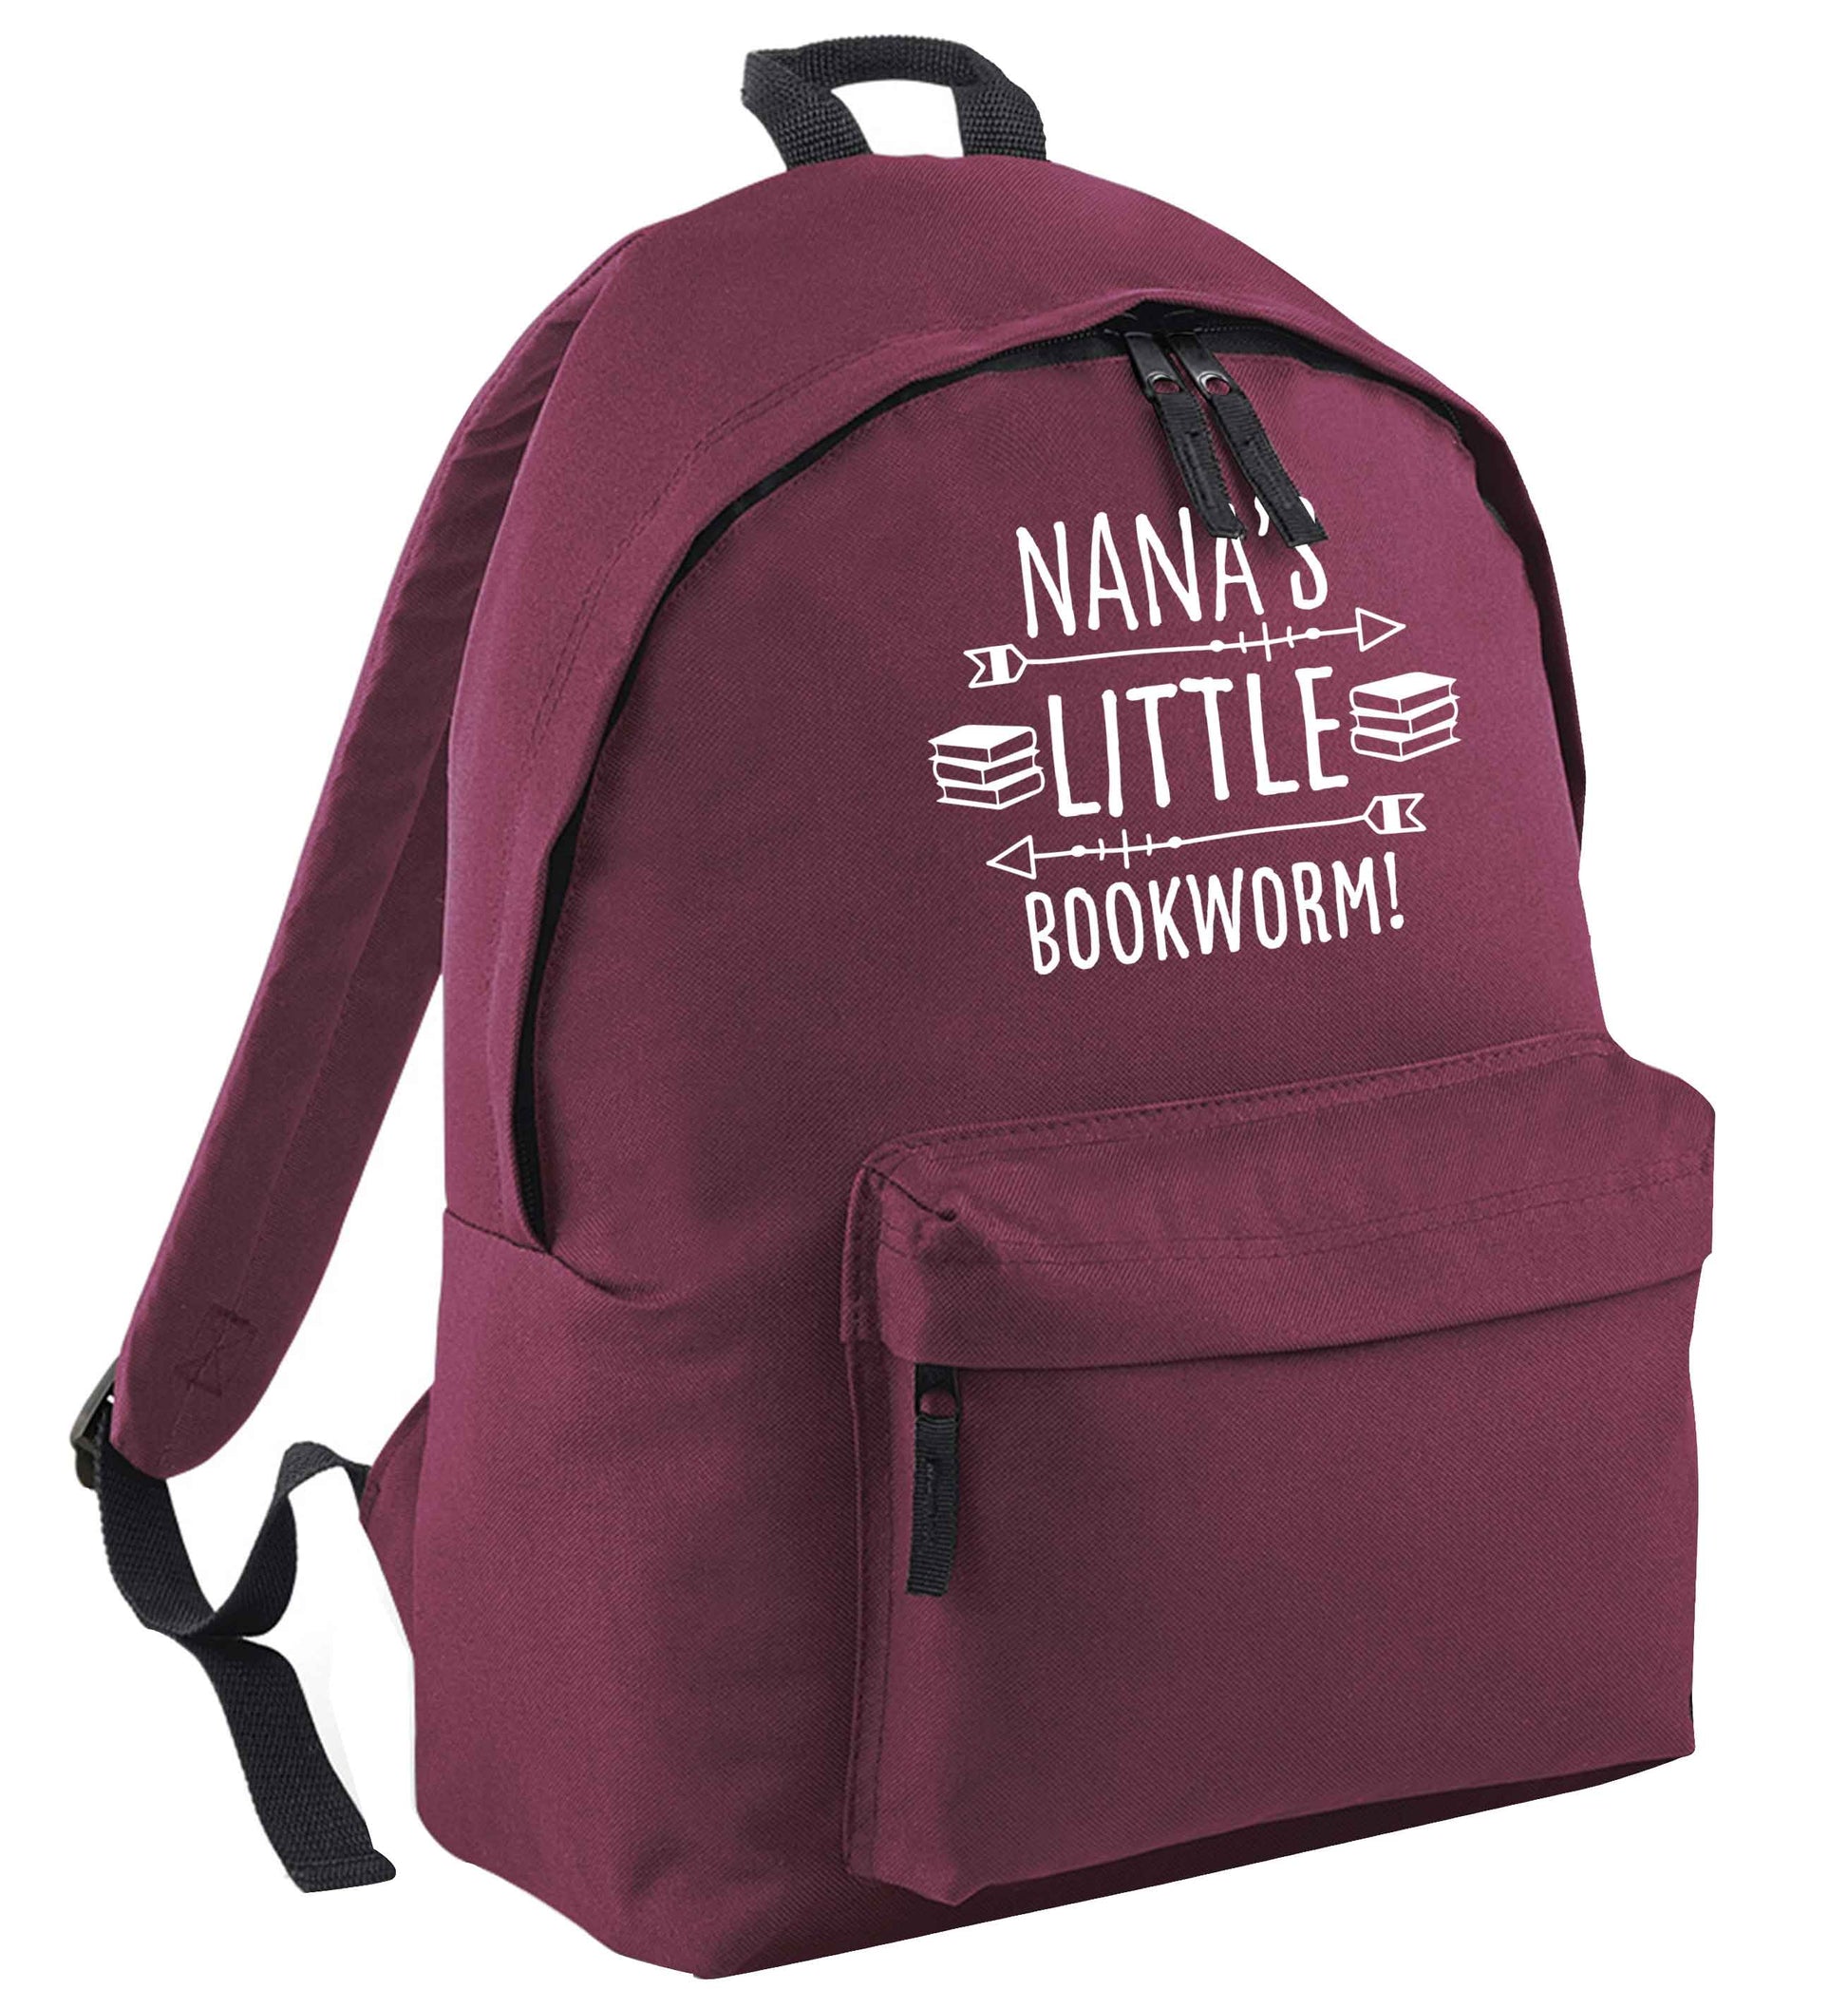 Nana's little bookworm | Children's backpack